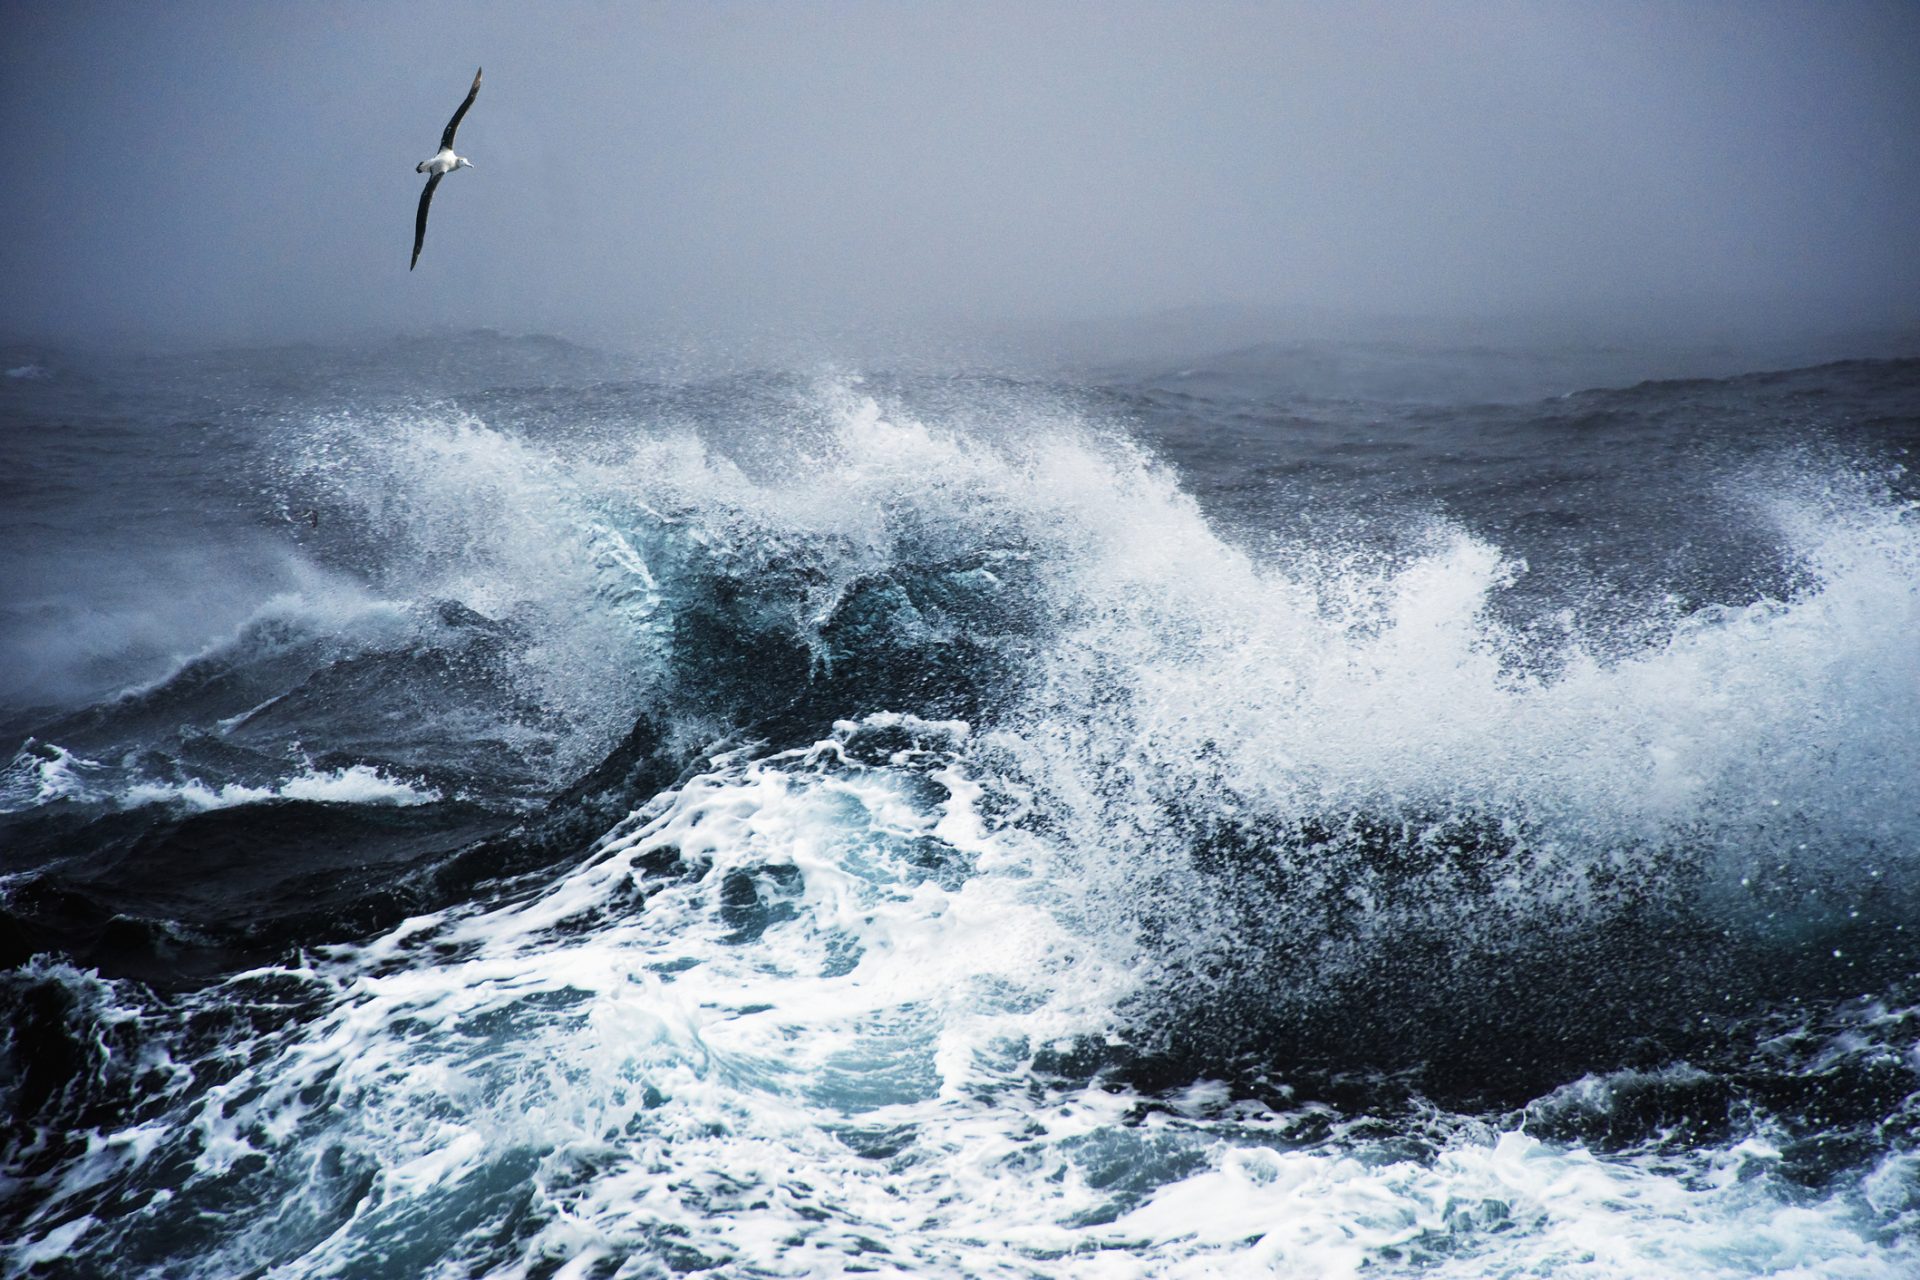 Meet the Drake Passage: the world’s most treacherous sea crossing